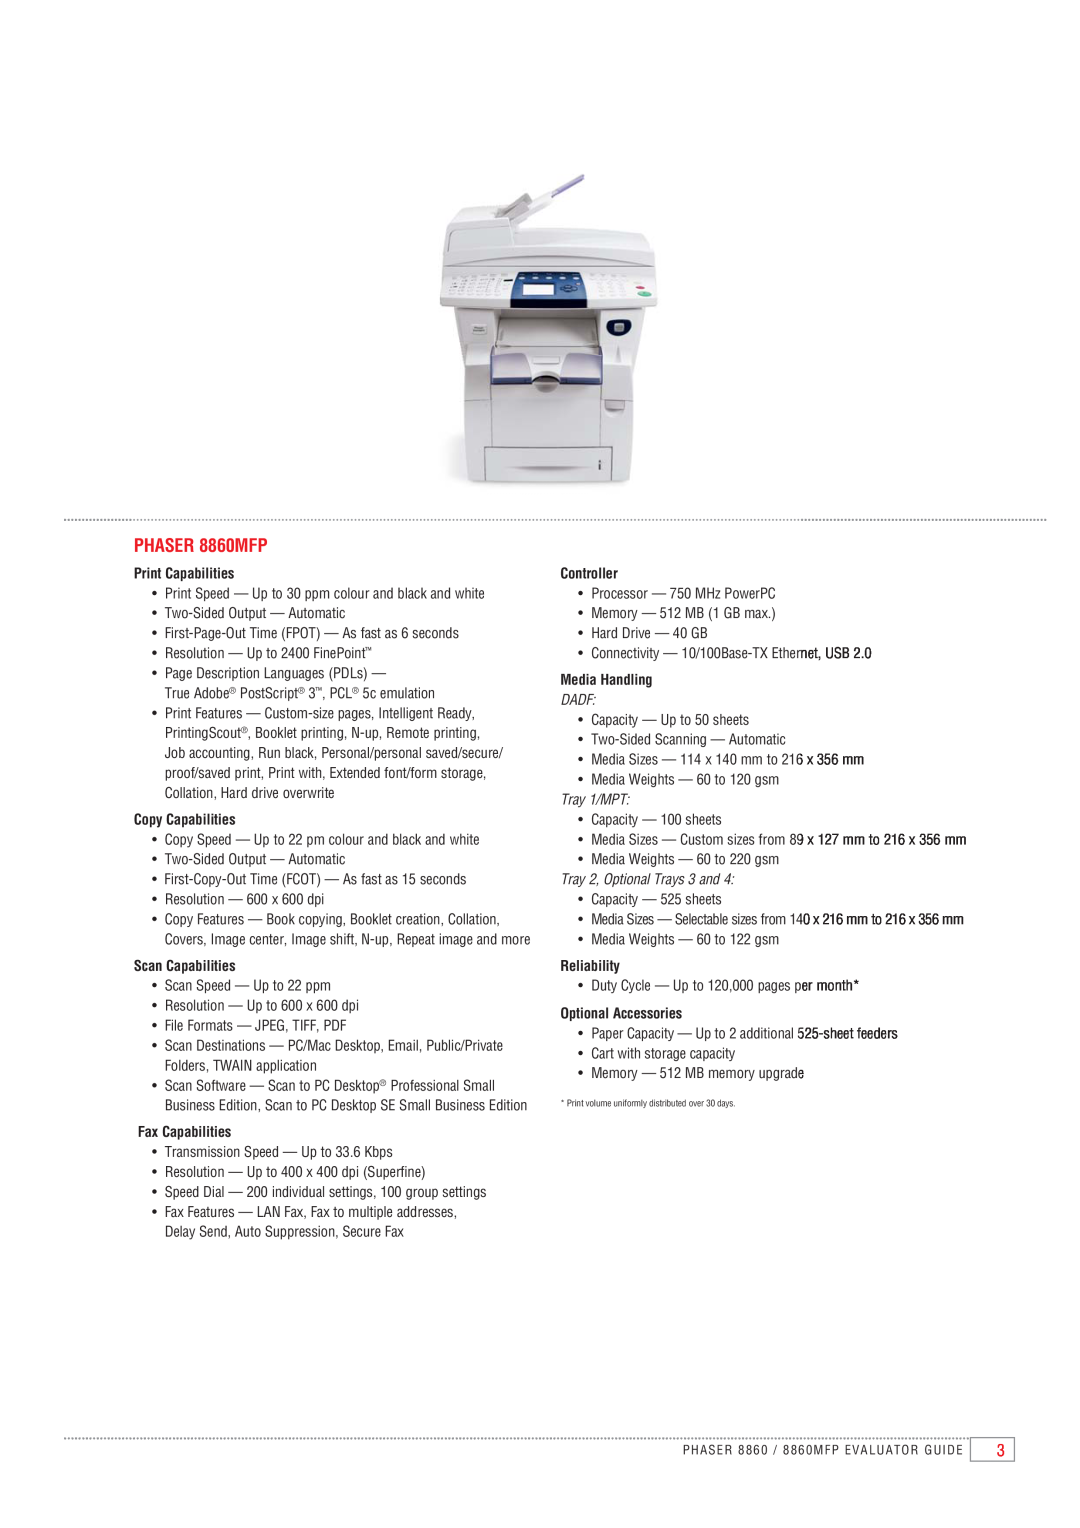 Xerox PHASER 8860MFP, Print Capabilities, Copy Capabilities, Scan Capabilities, Fax Capabilities, Controller, Dadf 